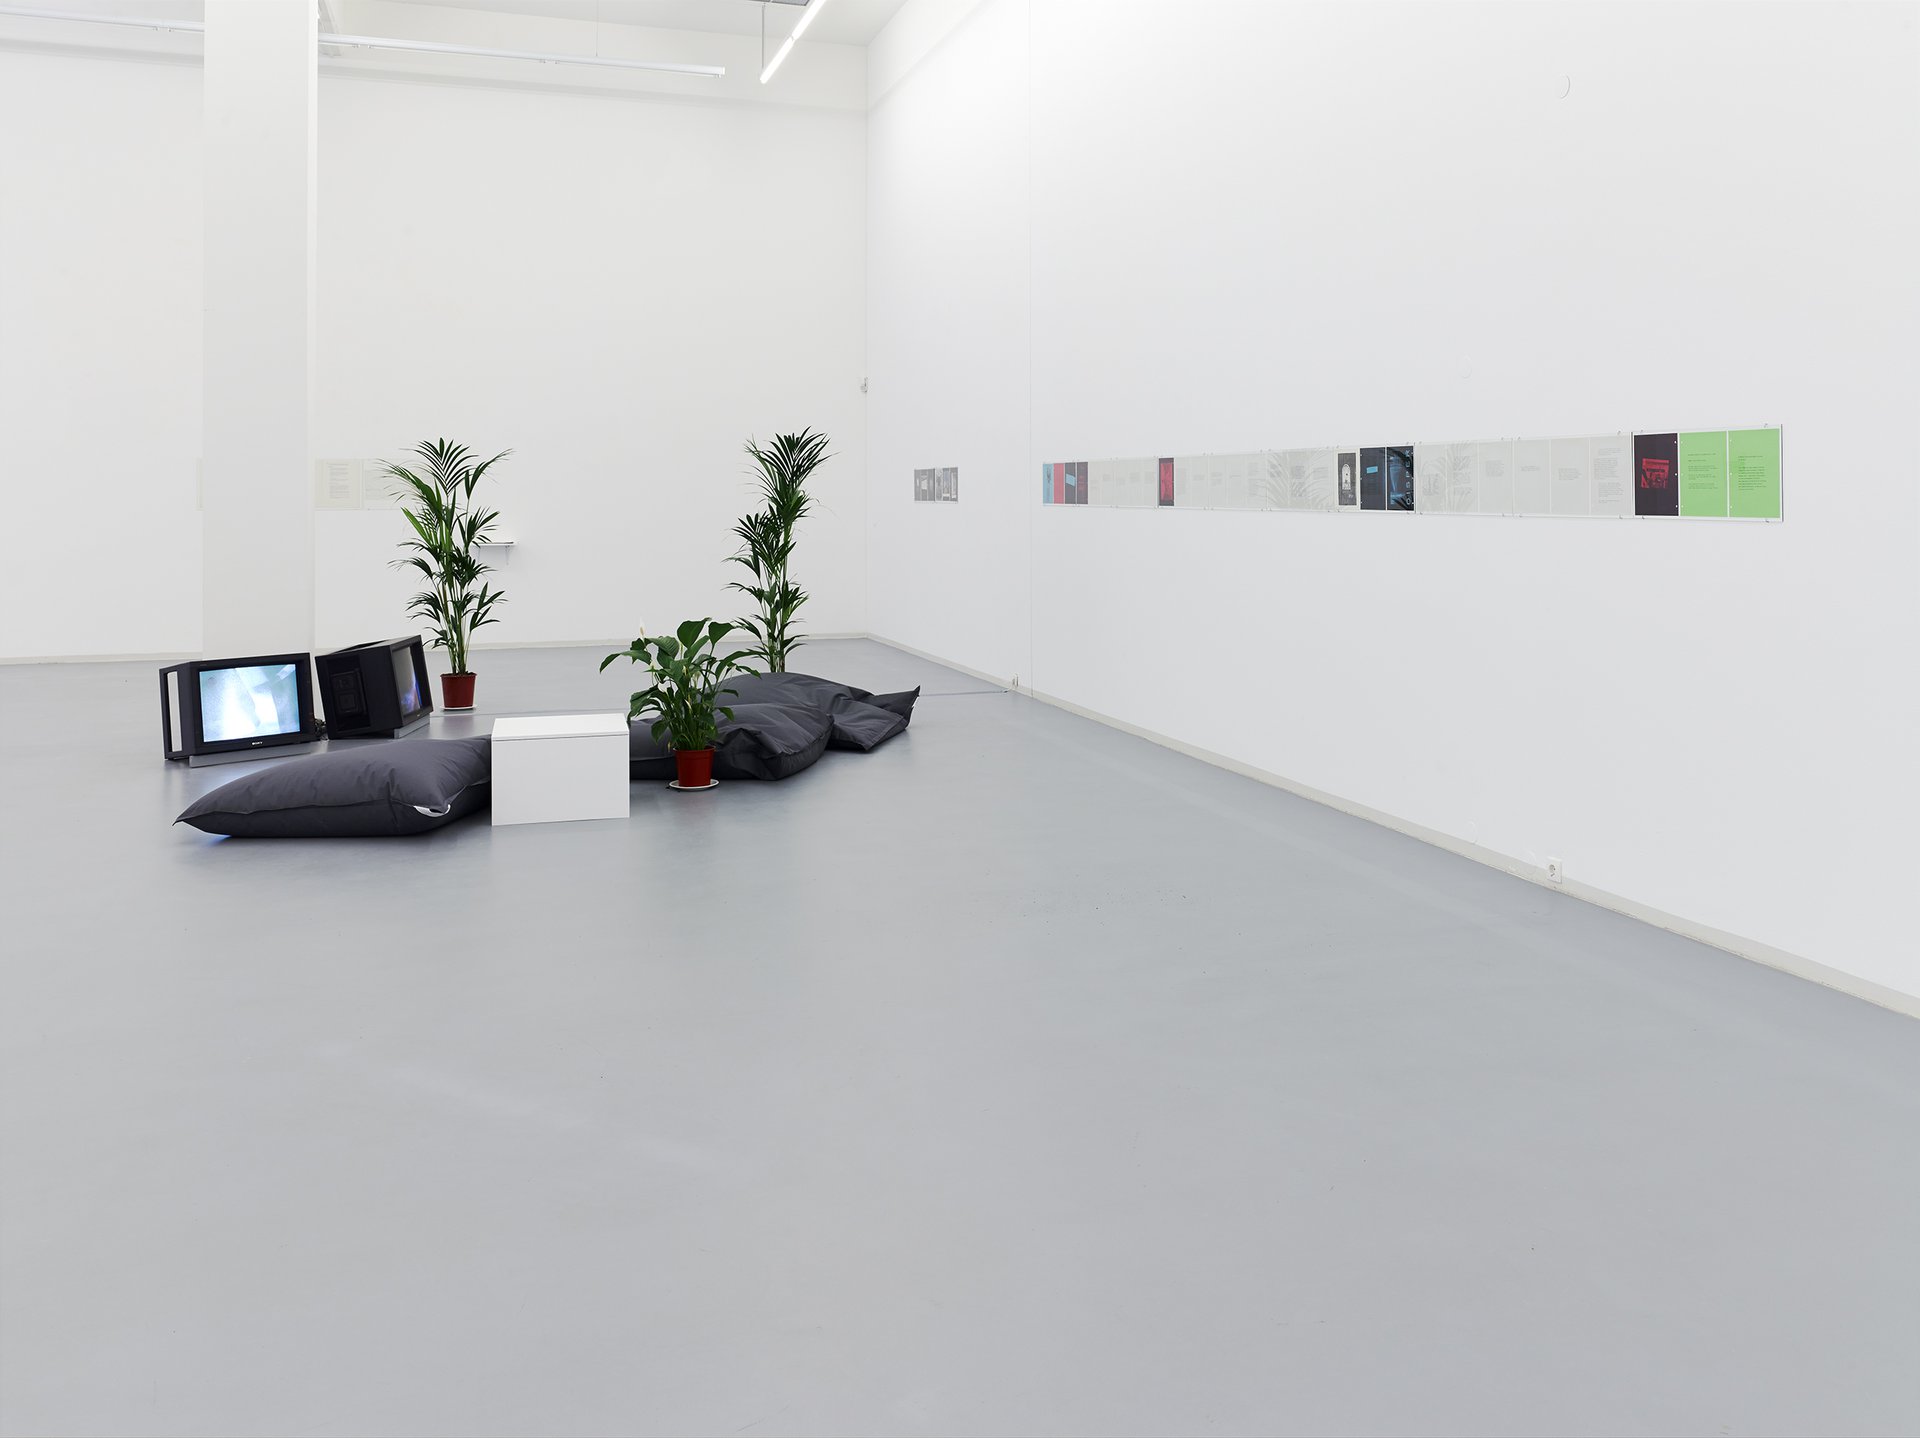 Maryanne Amacher, installation view, 2014, Bonner Kunstverein, Courtesy the artist. Photo: Simon Vogel